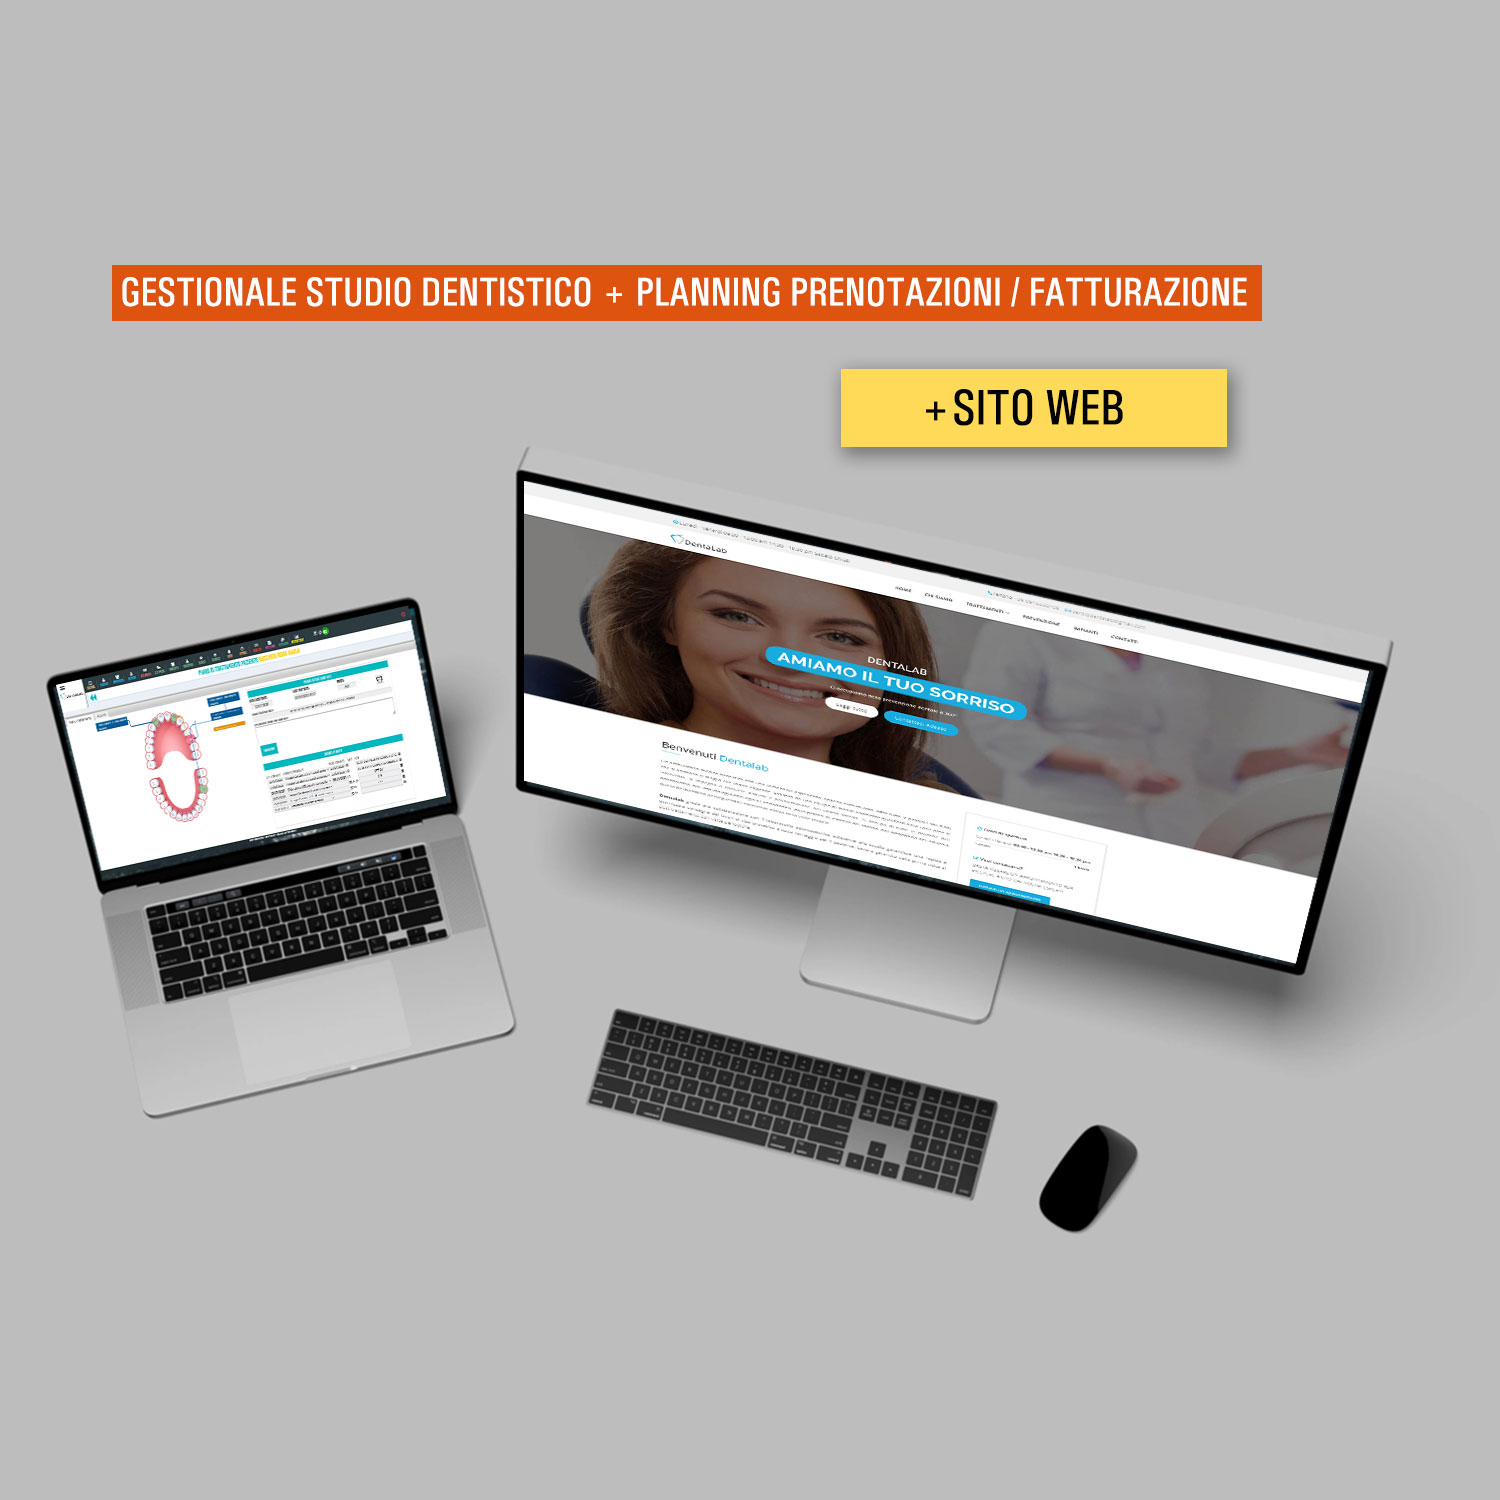 software gestionale studio dentistico online